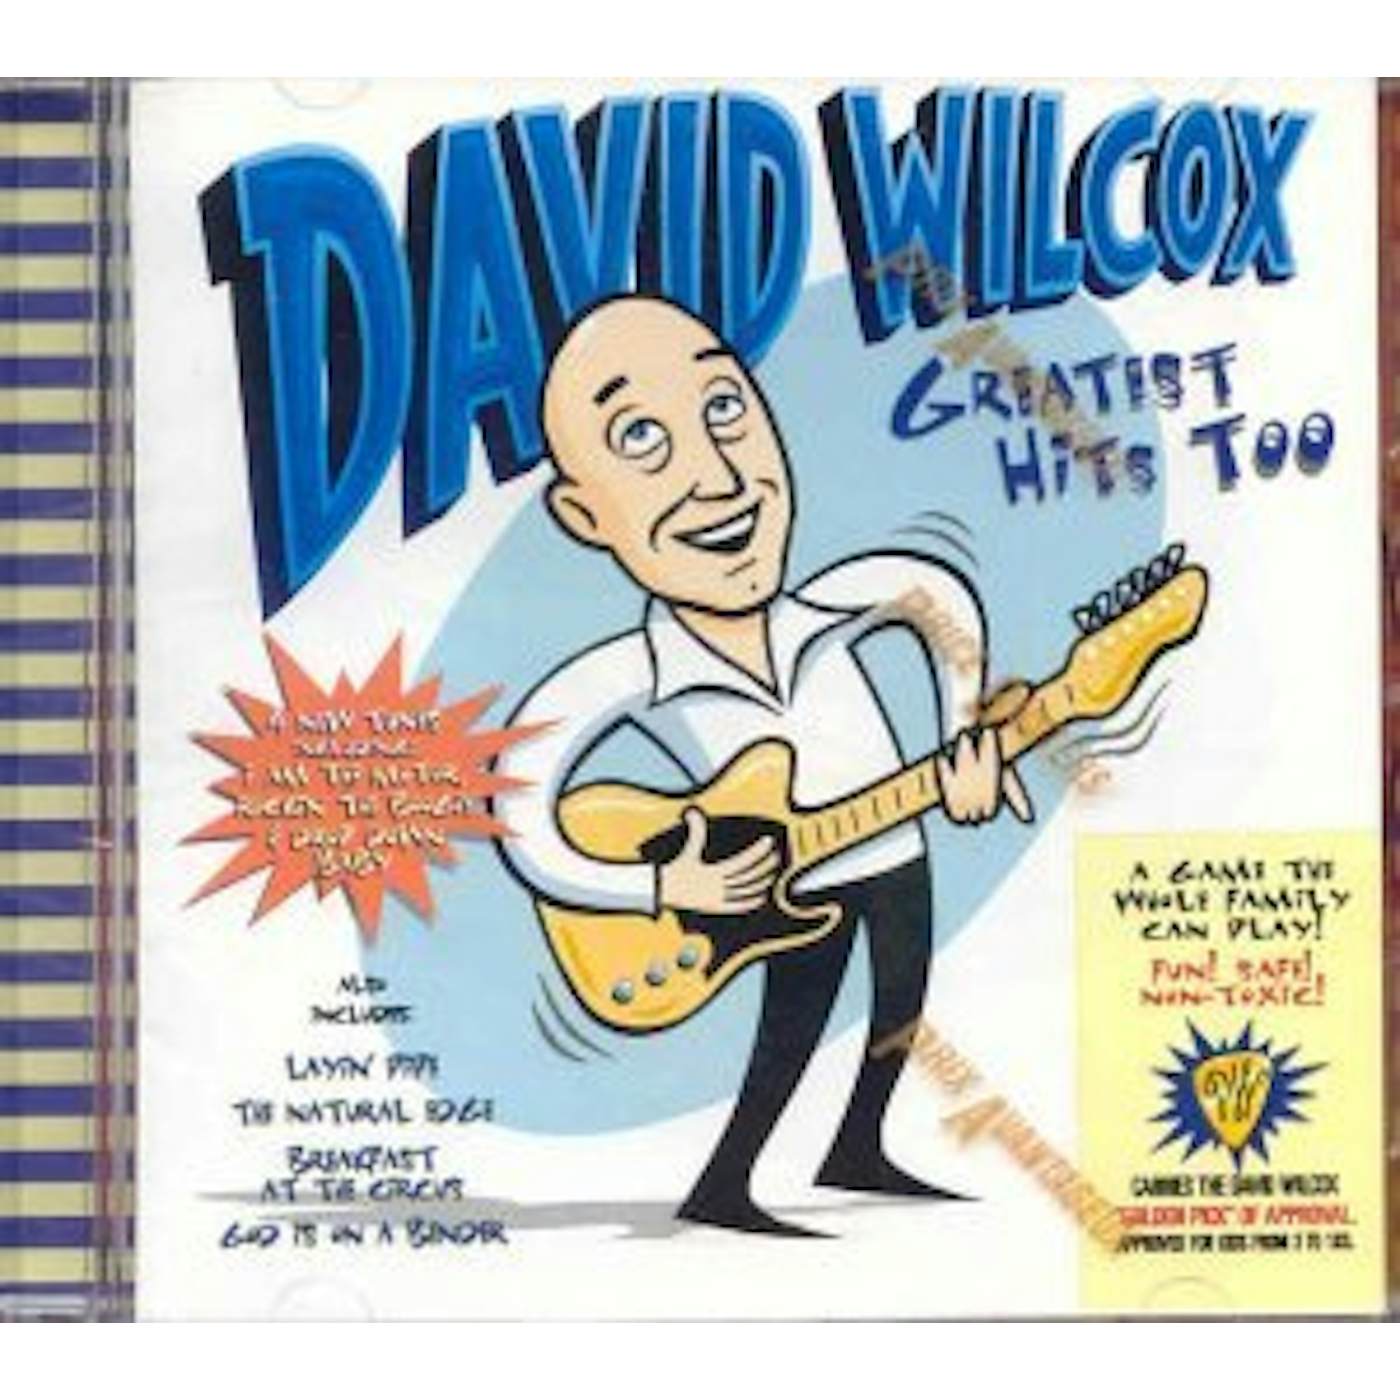 David Wilcox GREATEST HITS TOO CD